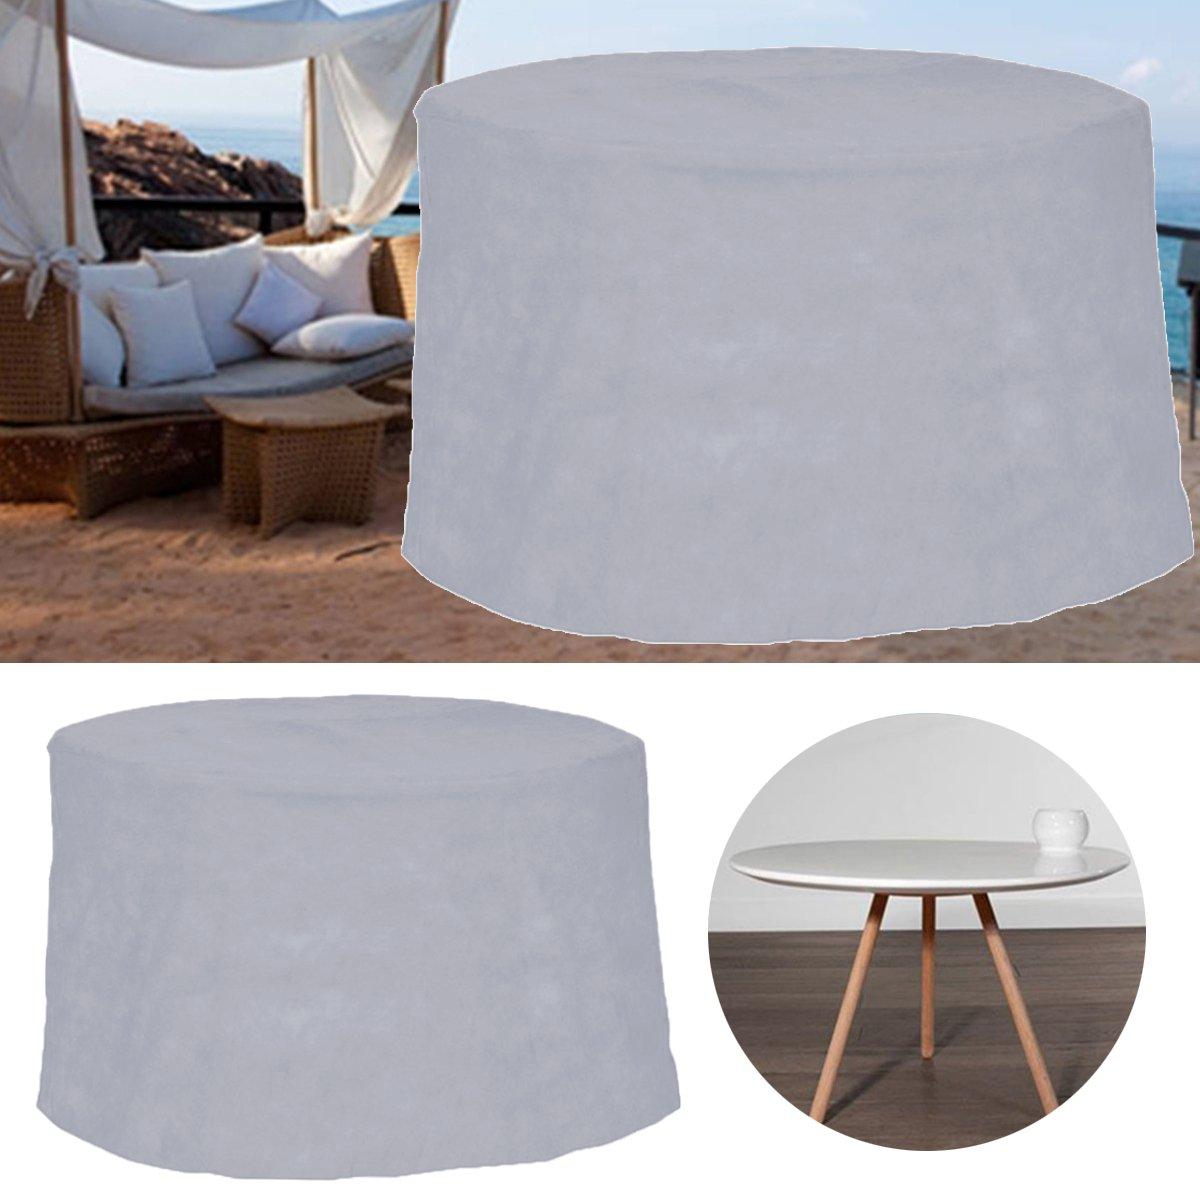 Outdoor Garden Patio Furniture Cover Waterproof Dustproof Desk Table Chair Cover